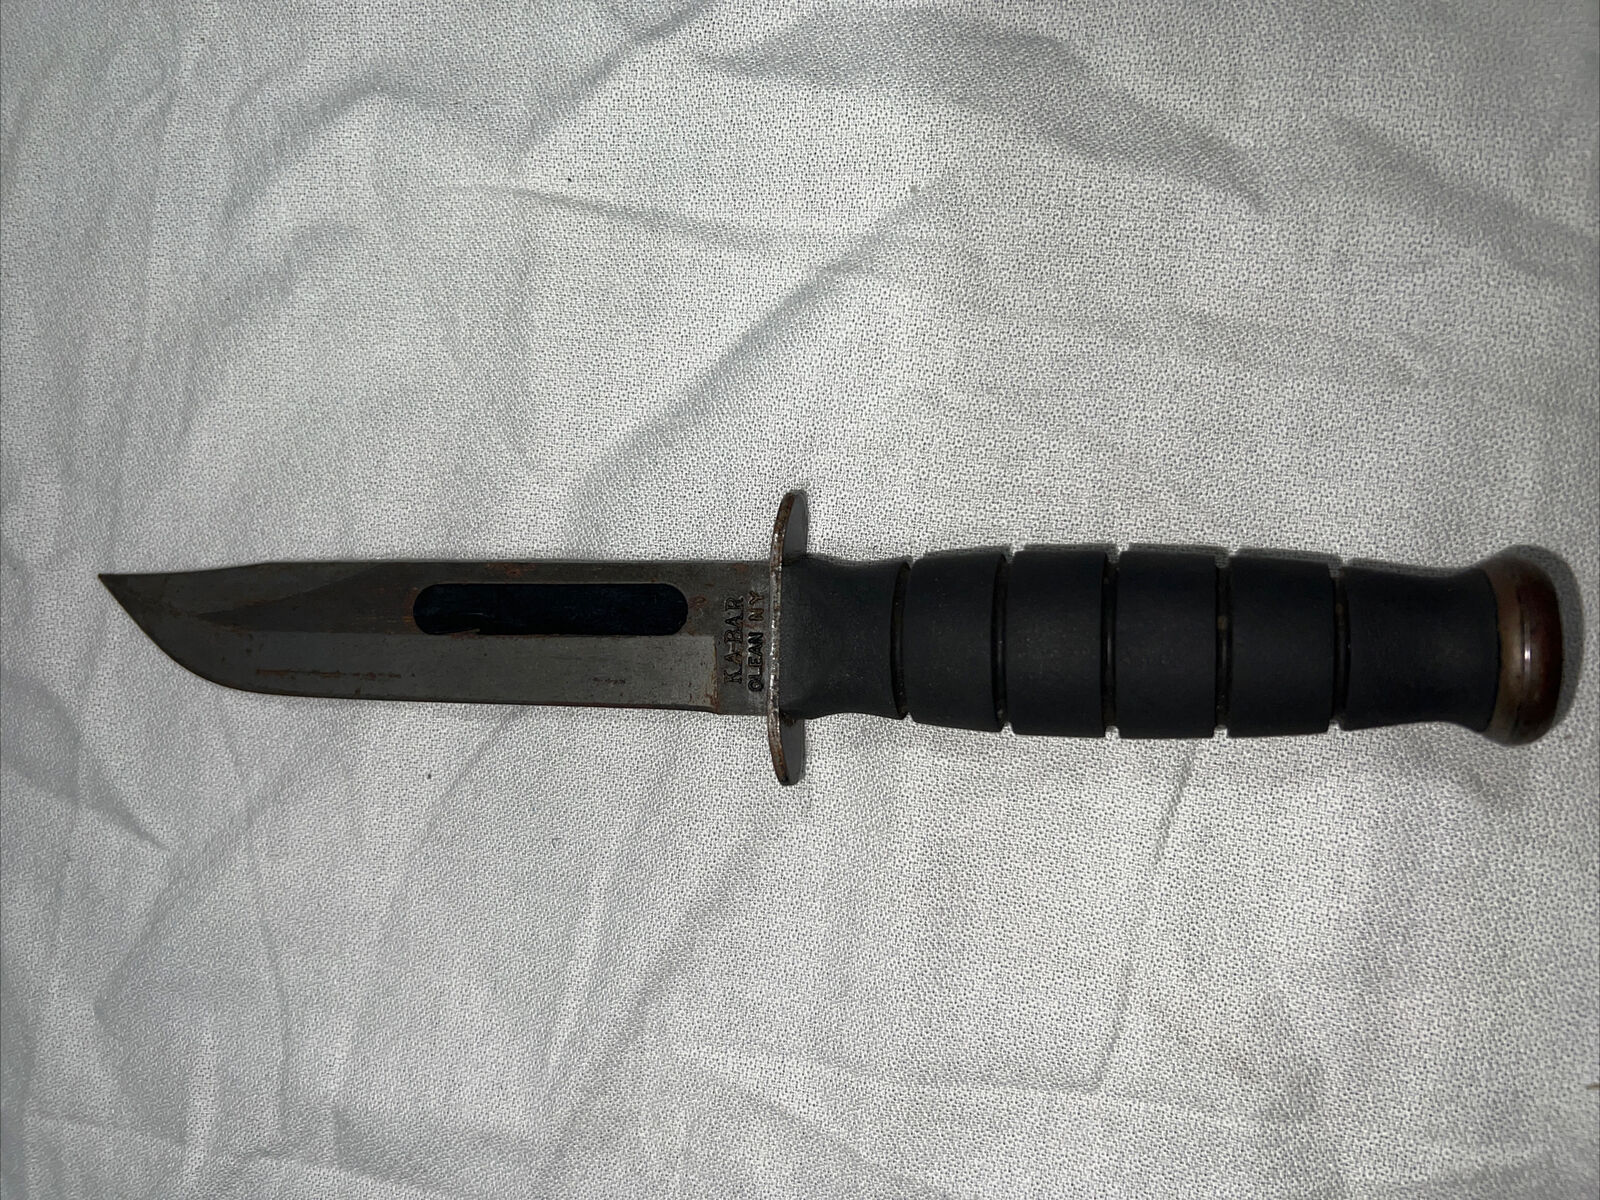 KA-BAR Olean made in USA Knife